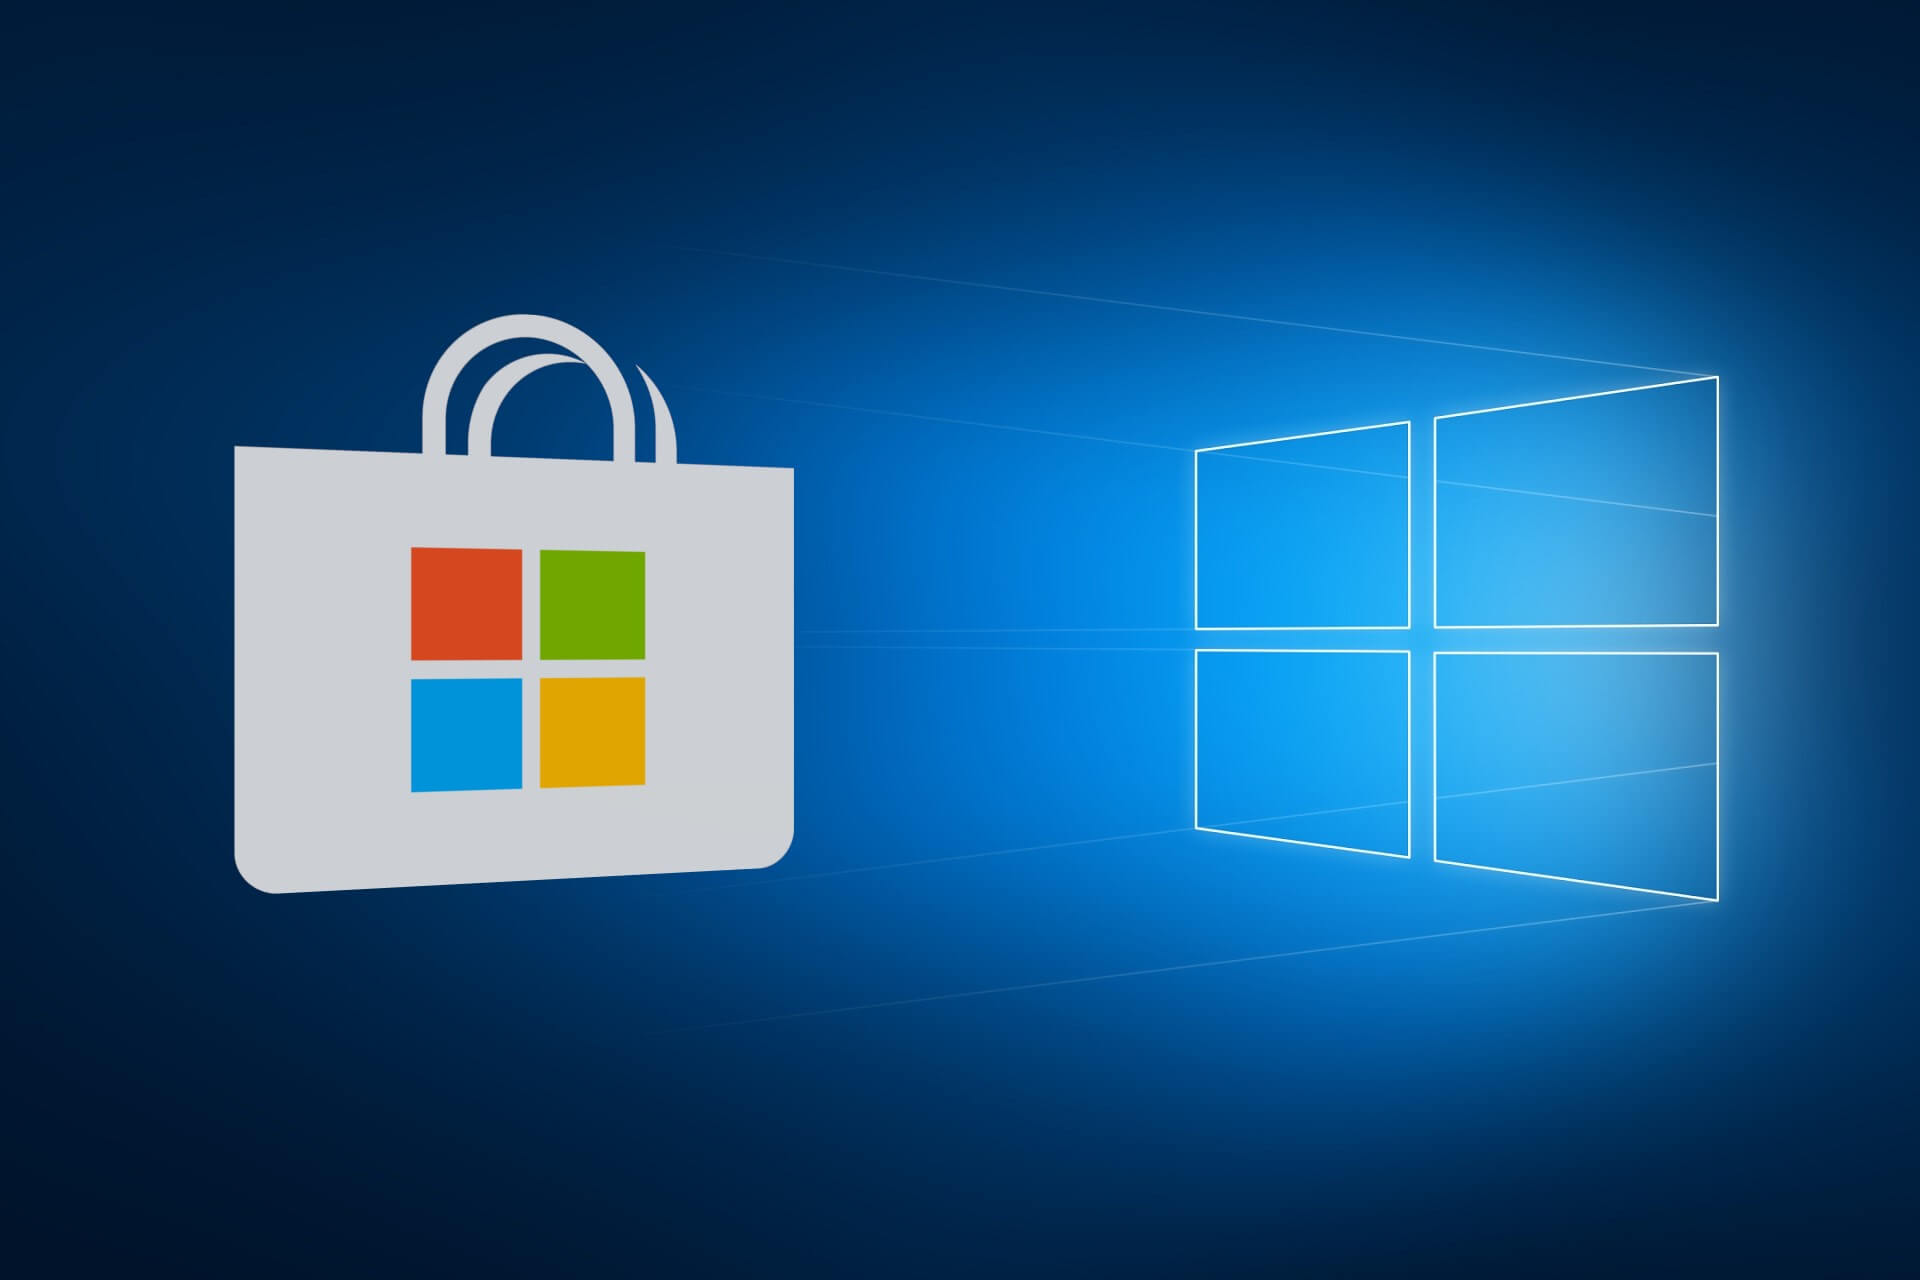 Windows Store or Microsoft Store